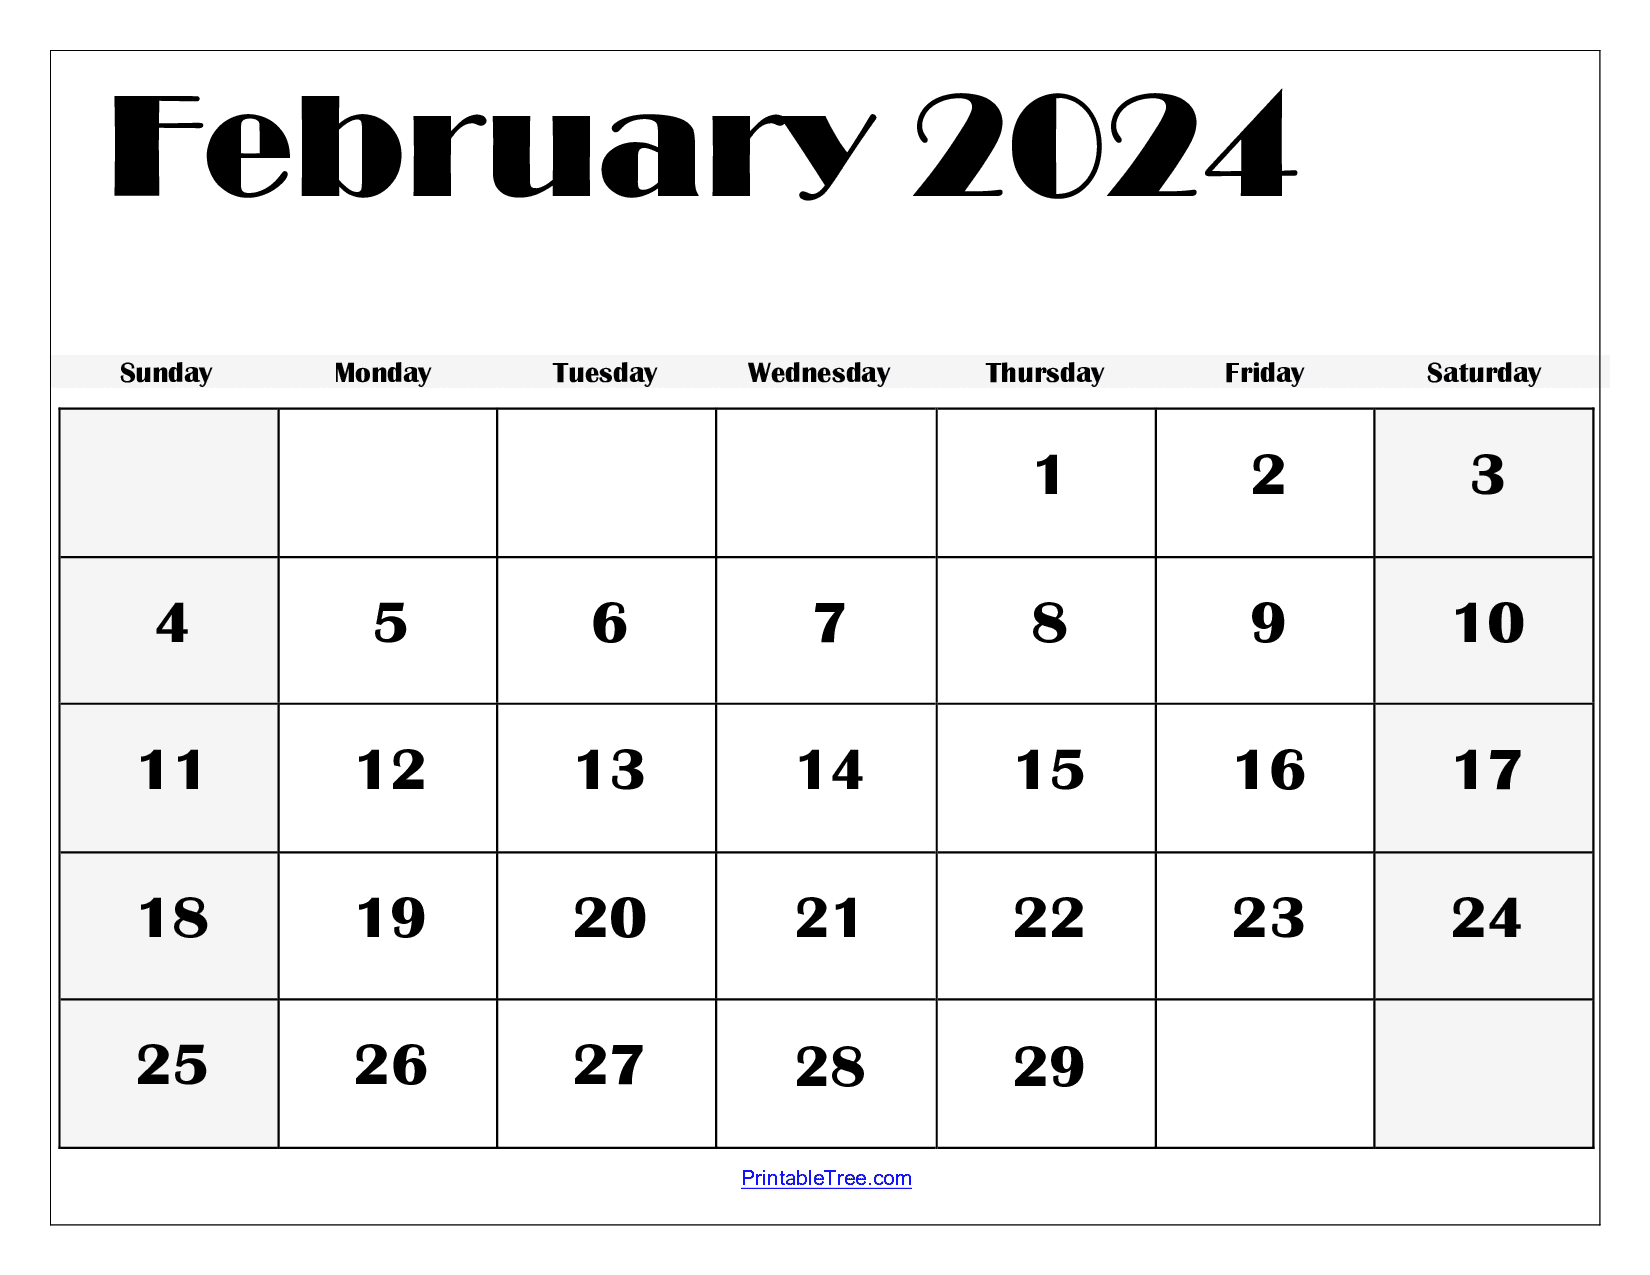 February 2024 Calendar Printable Pdf Template With Holidays for Printable Month Calendar February 2024